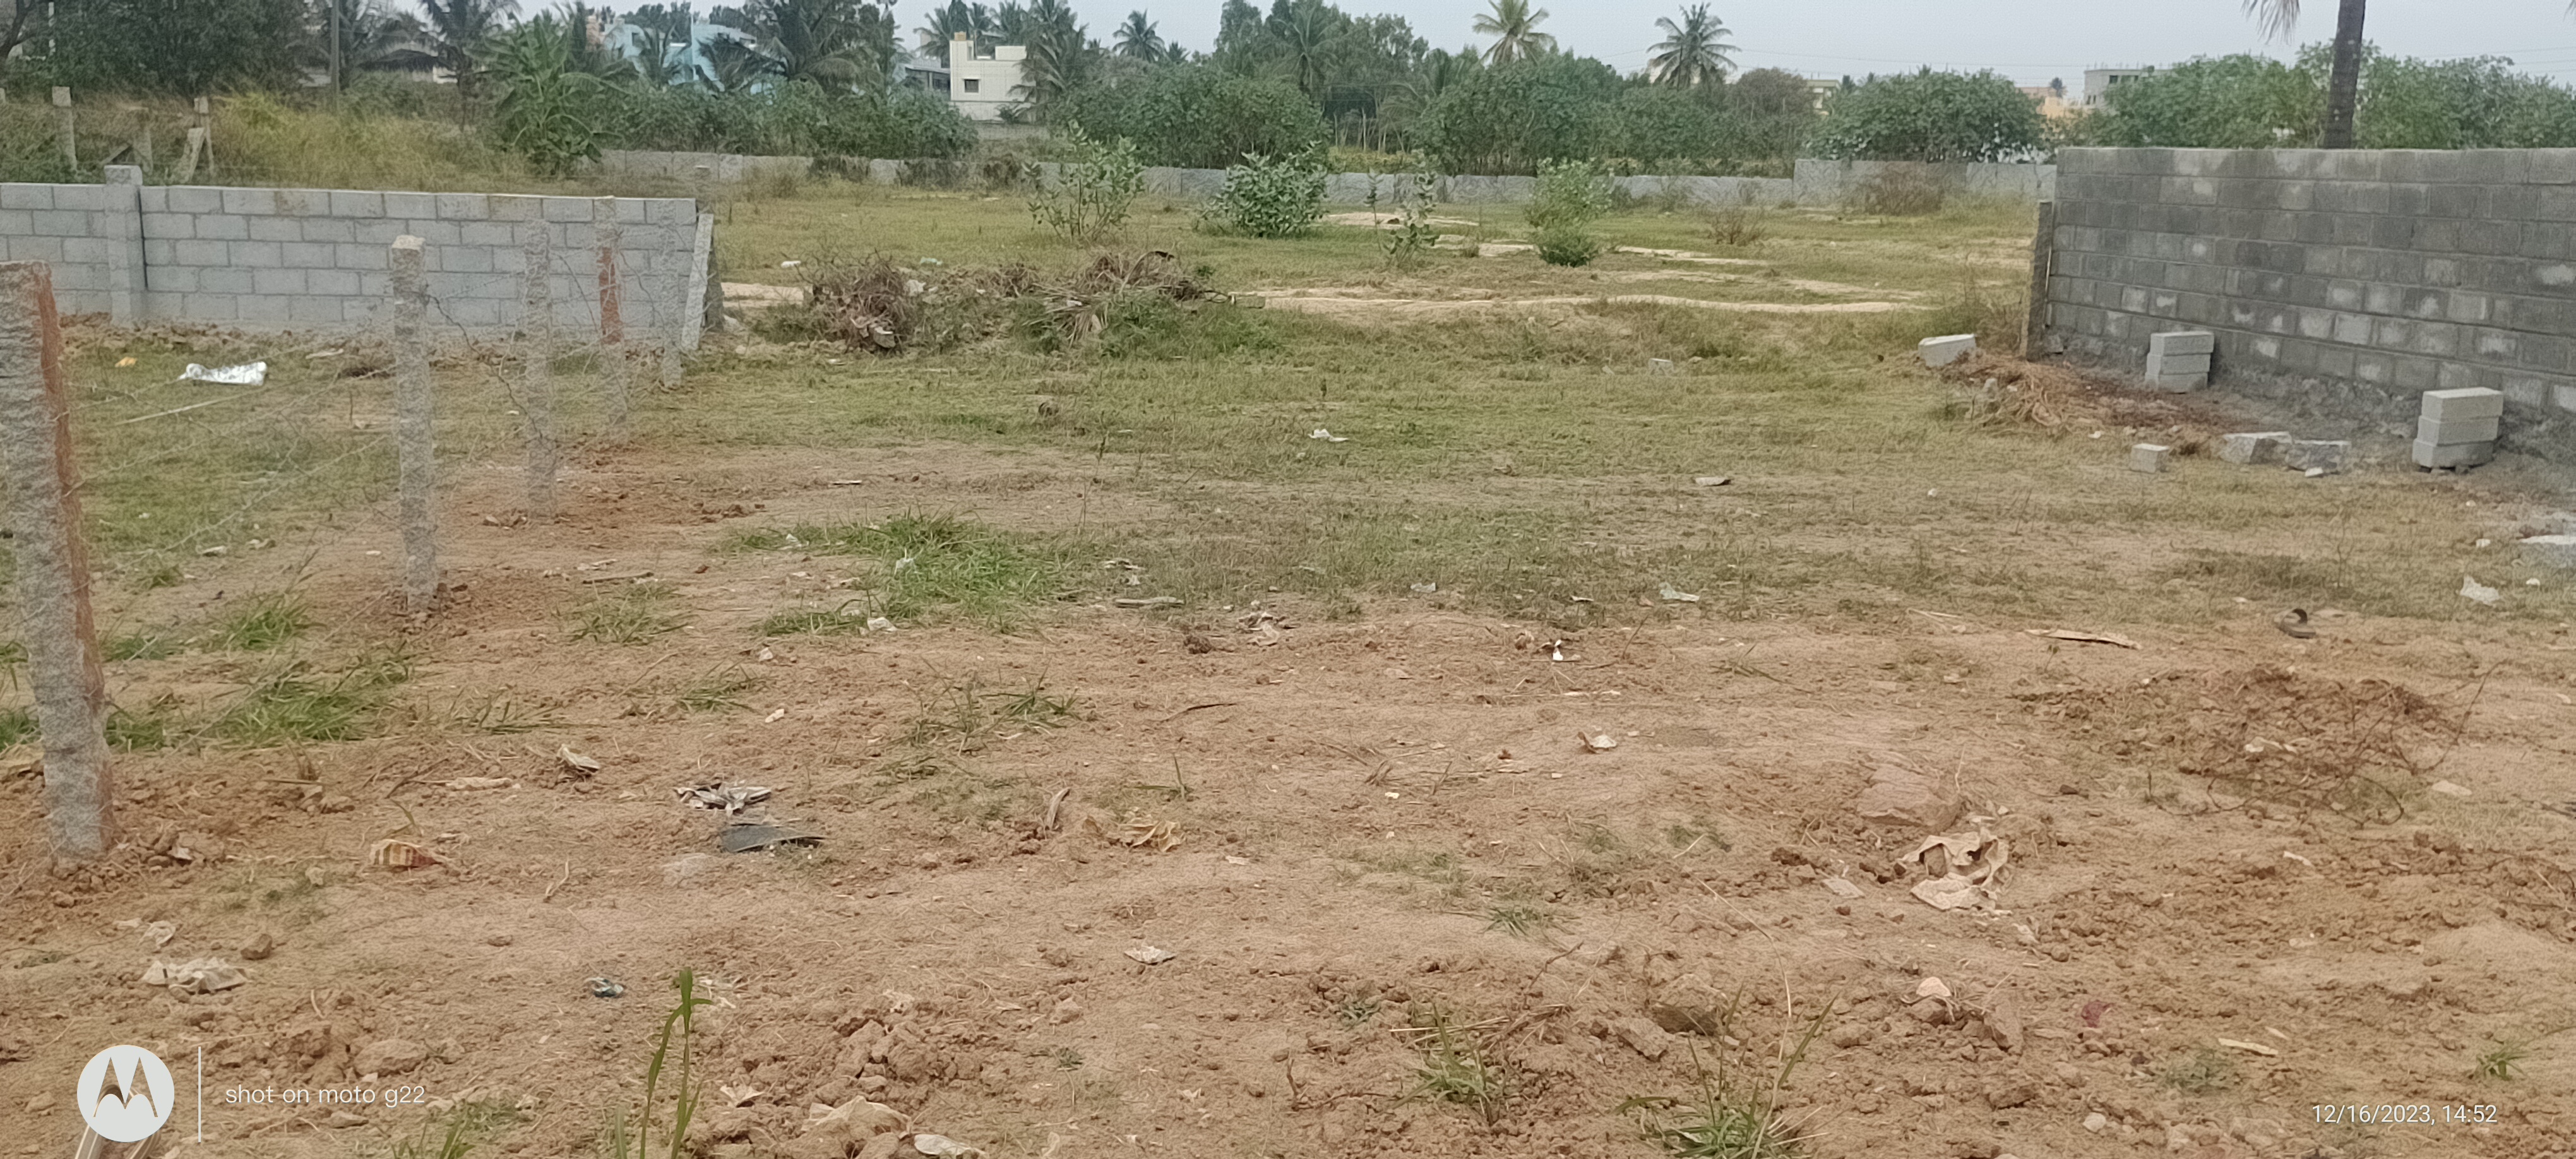 2204 sqft Plots & Land for Sale in Battarahalli